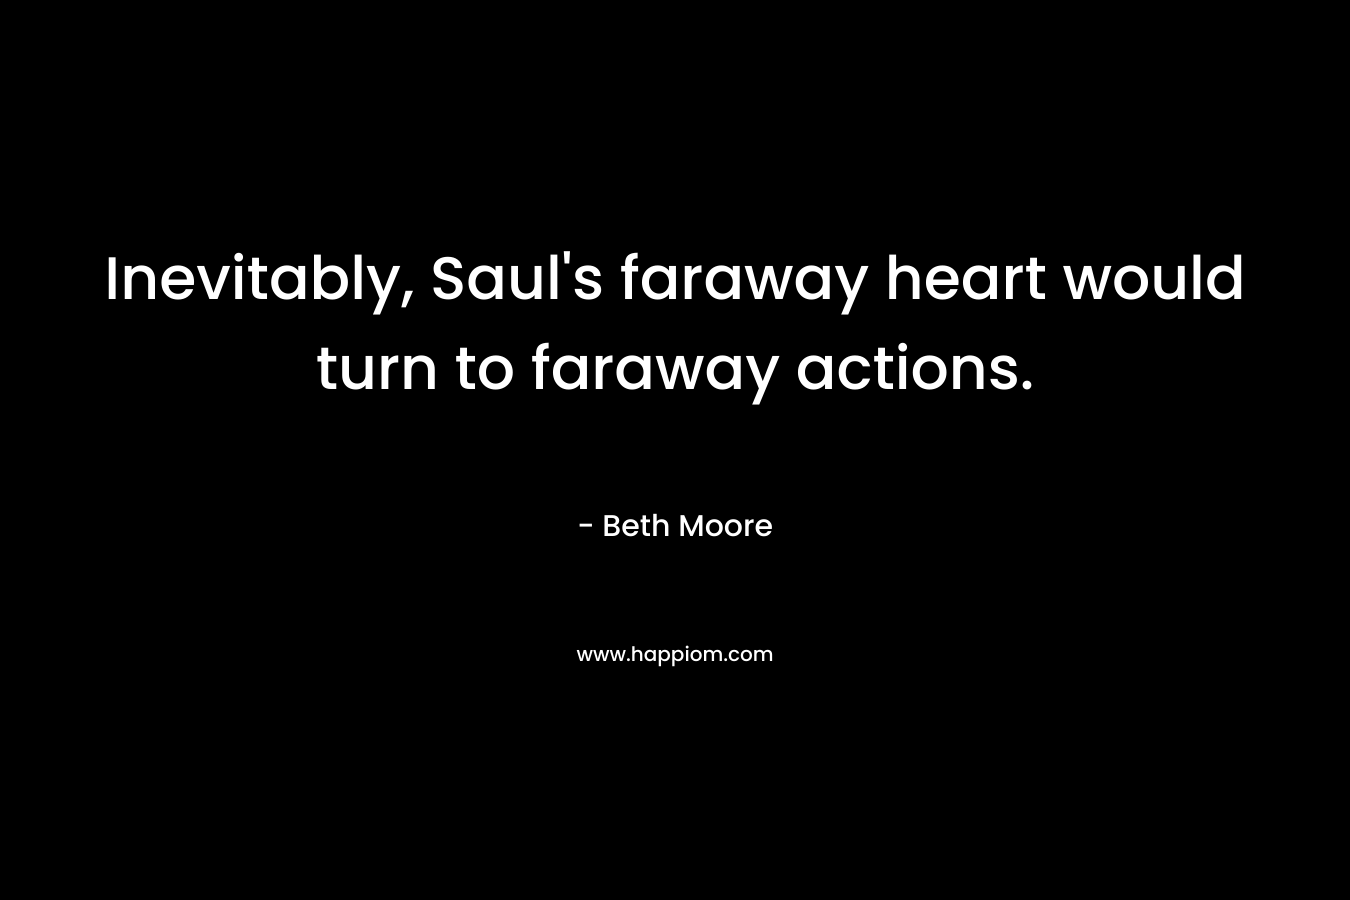 Inevitably, Saul’s faraway heart would turn to faraway actions. – Beth Moore